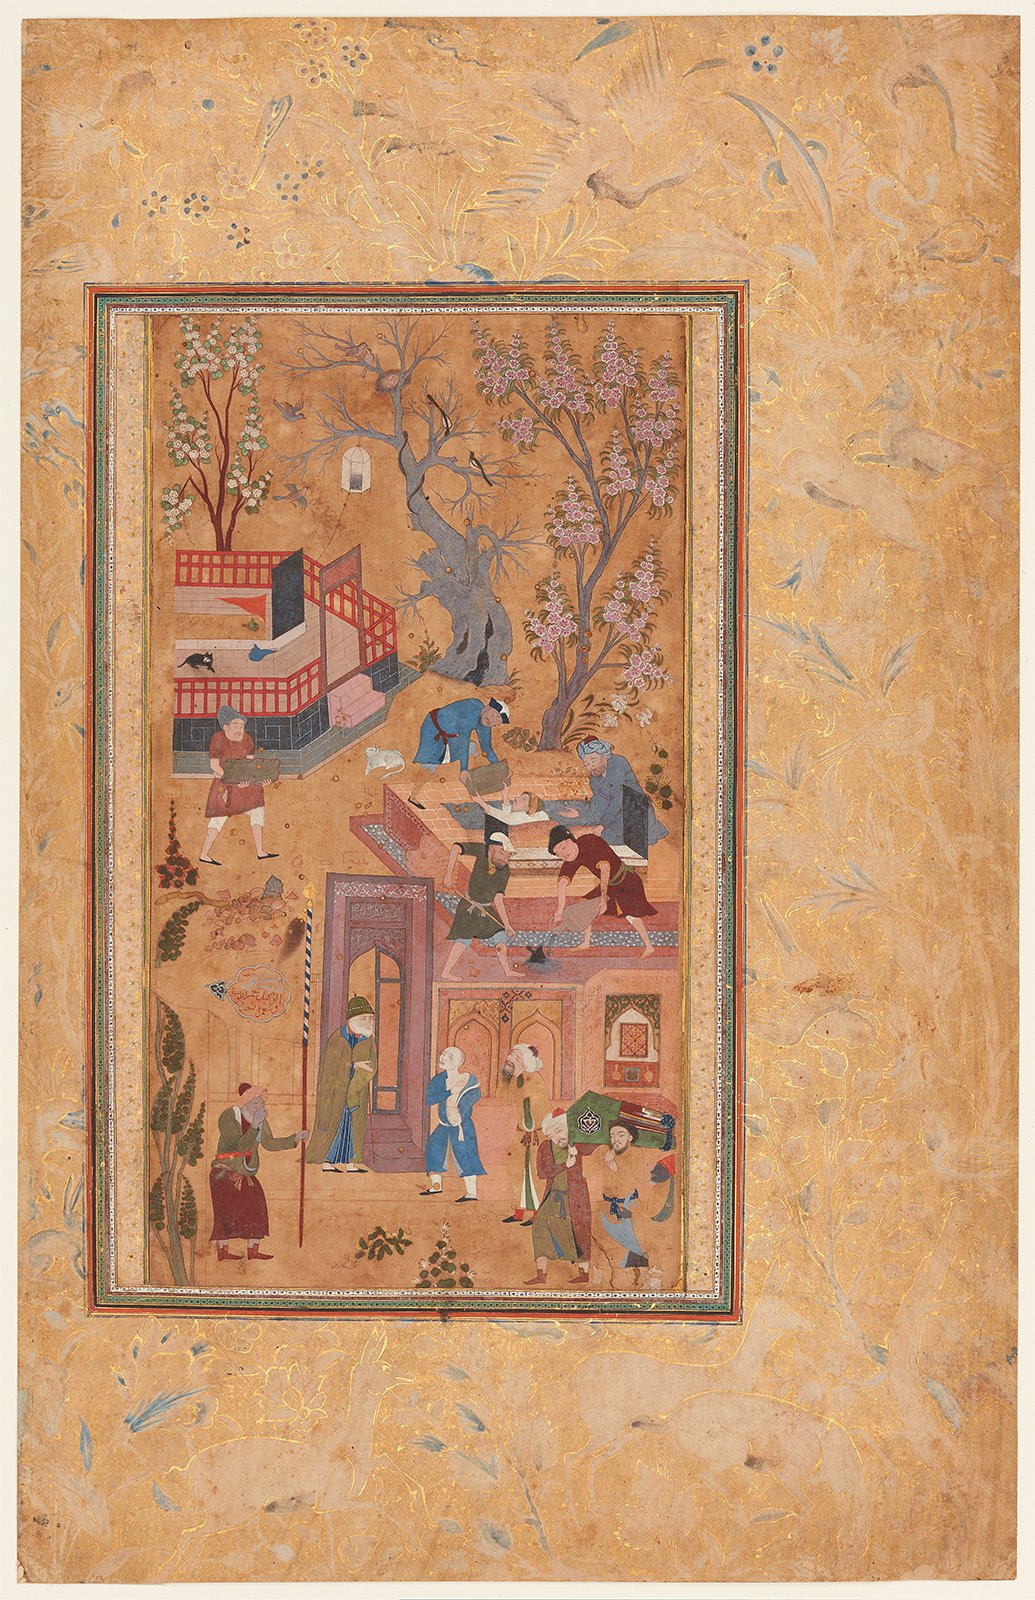 De zoon die om zijn vader treurde by Sahifa Banu (toegekend) - circa 1620 - 22,3 x 12,2 cm 